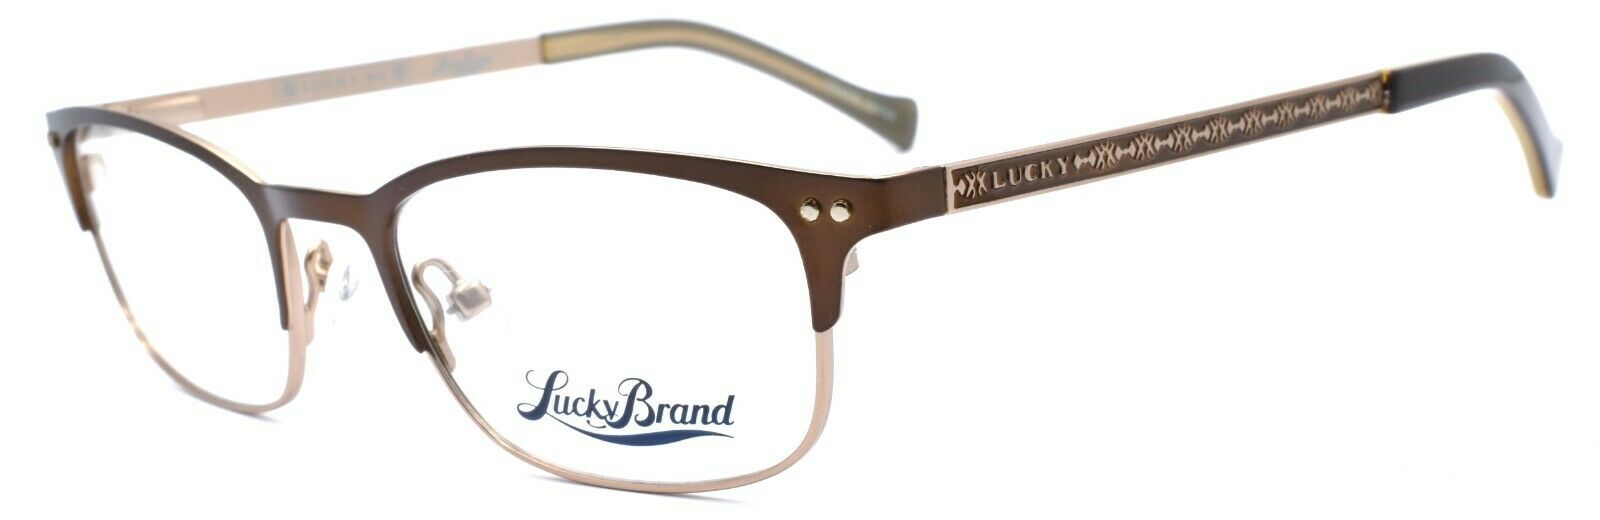 1-LUCKY BRAND Smarty Kids Eyeglasses Frames 45-17-130 Brown-751286246247-IKSpecs